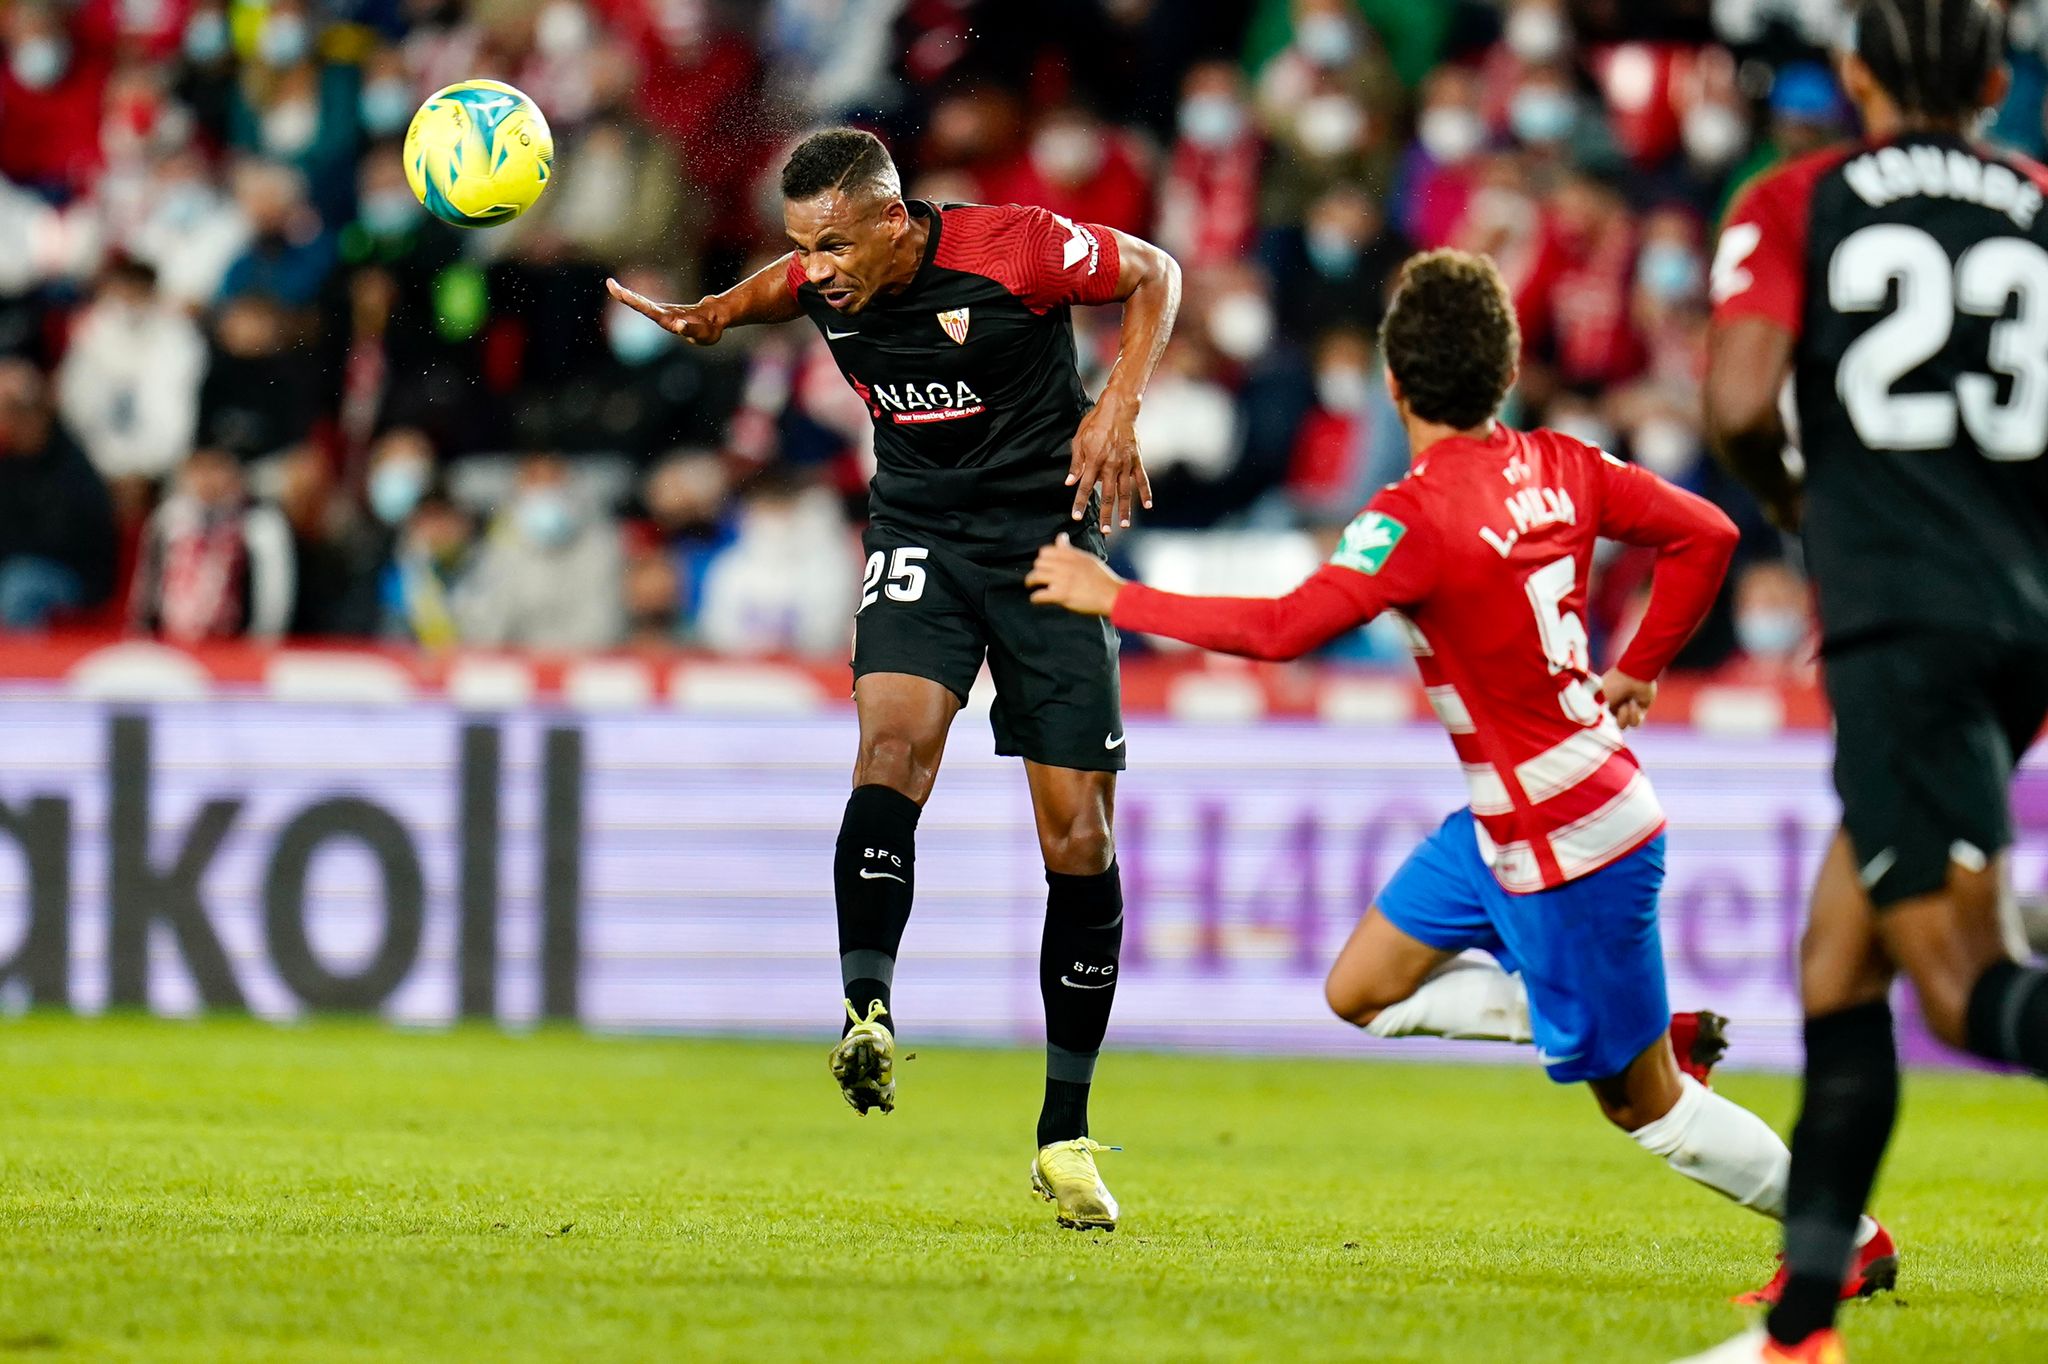 Fernando in action against Granada CF